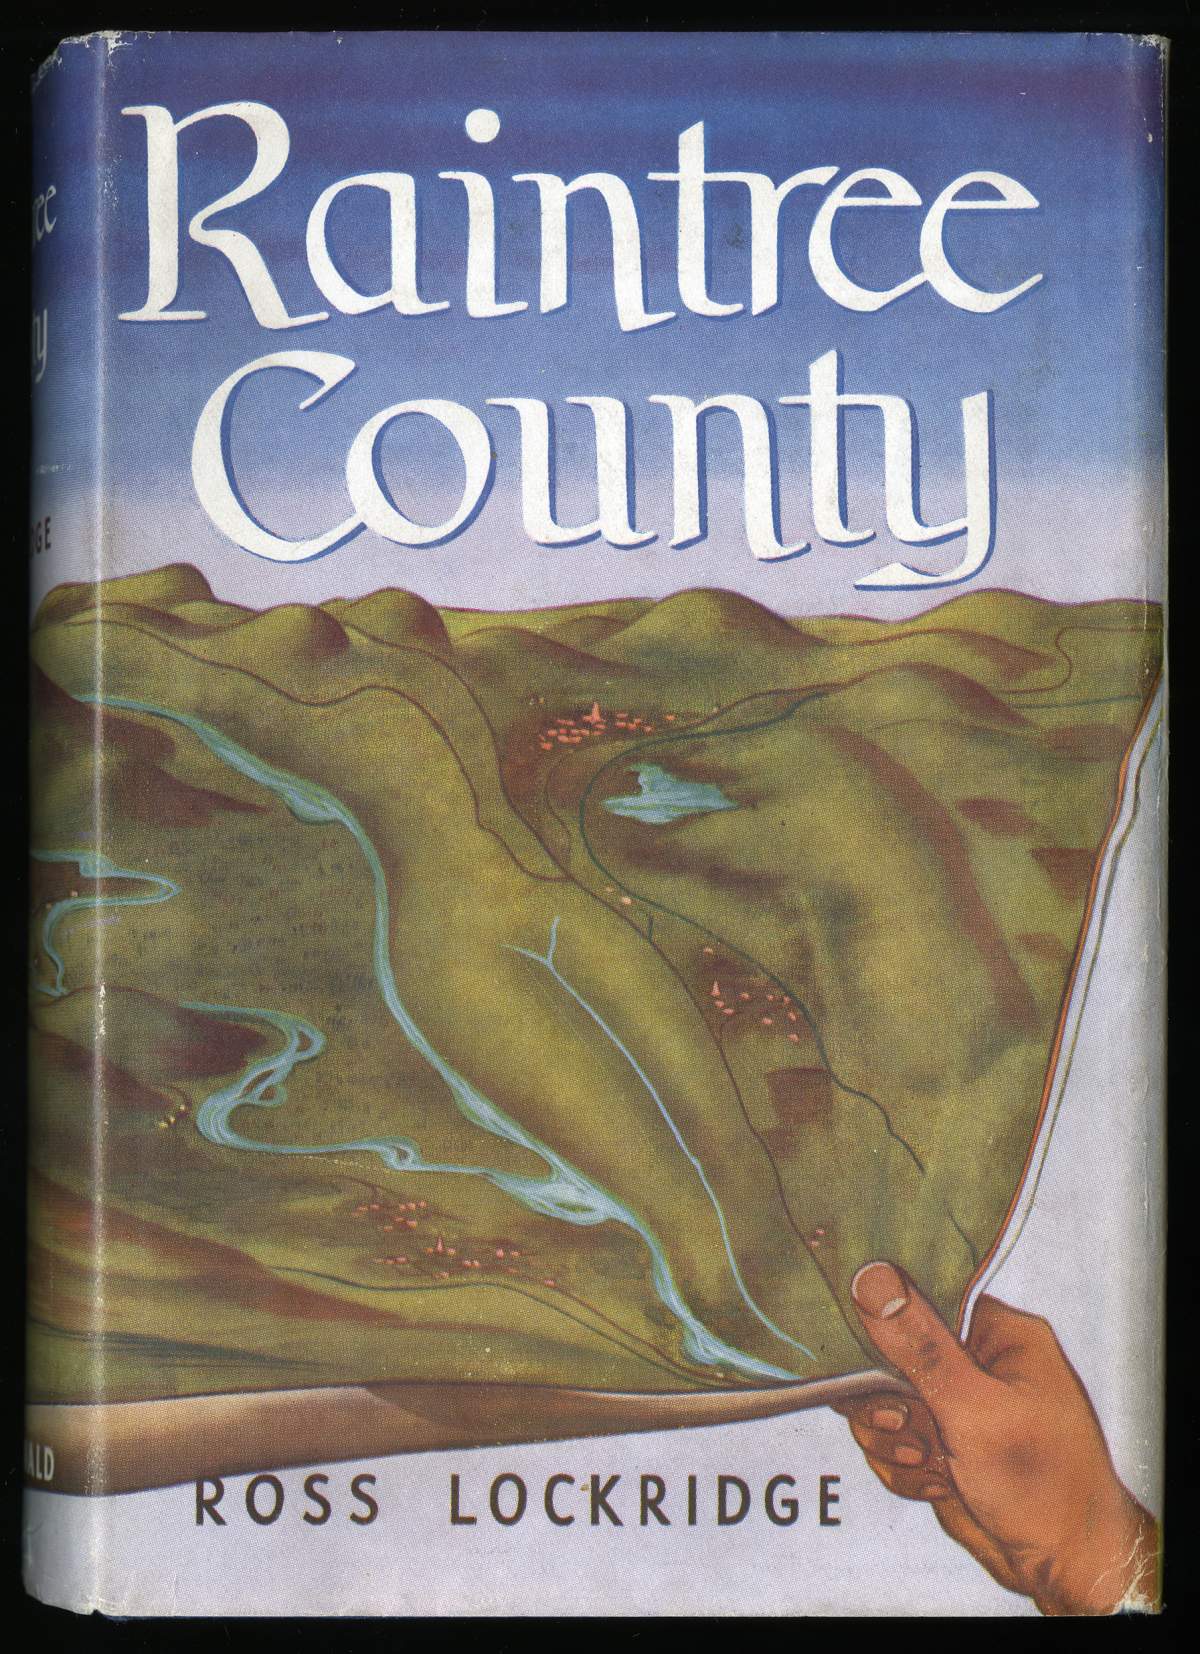 The cover for Ross Lockridge Jr.'s Raintree County